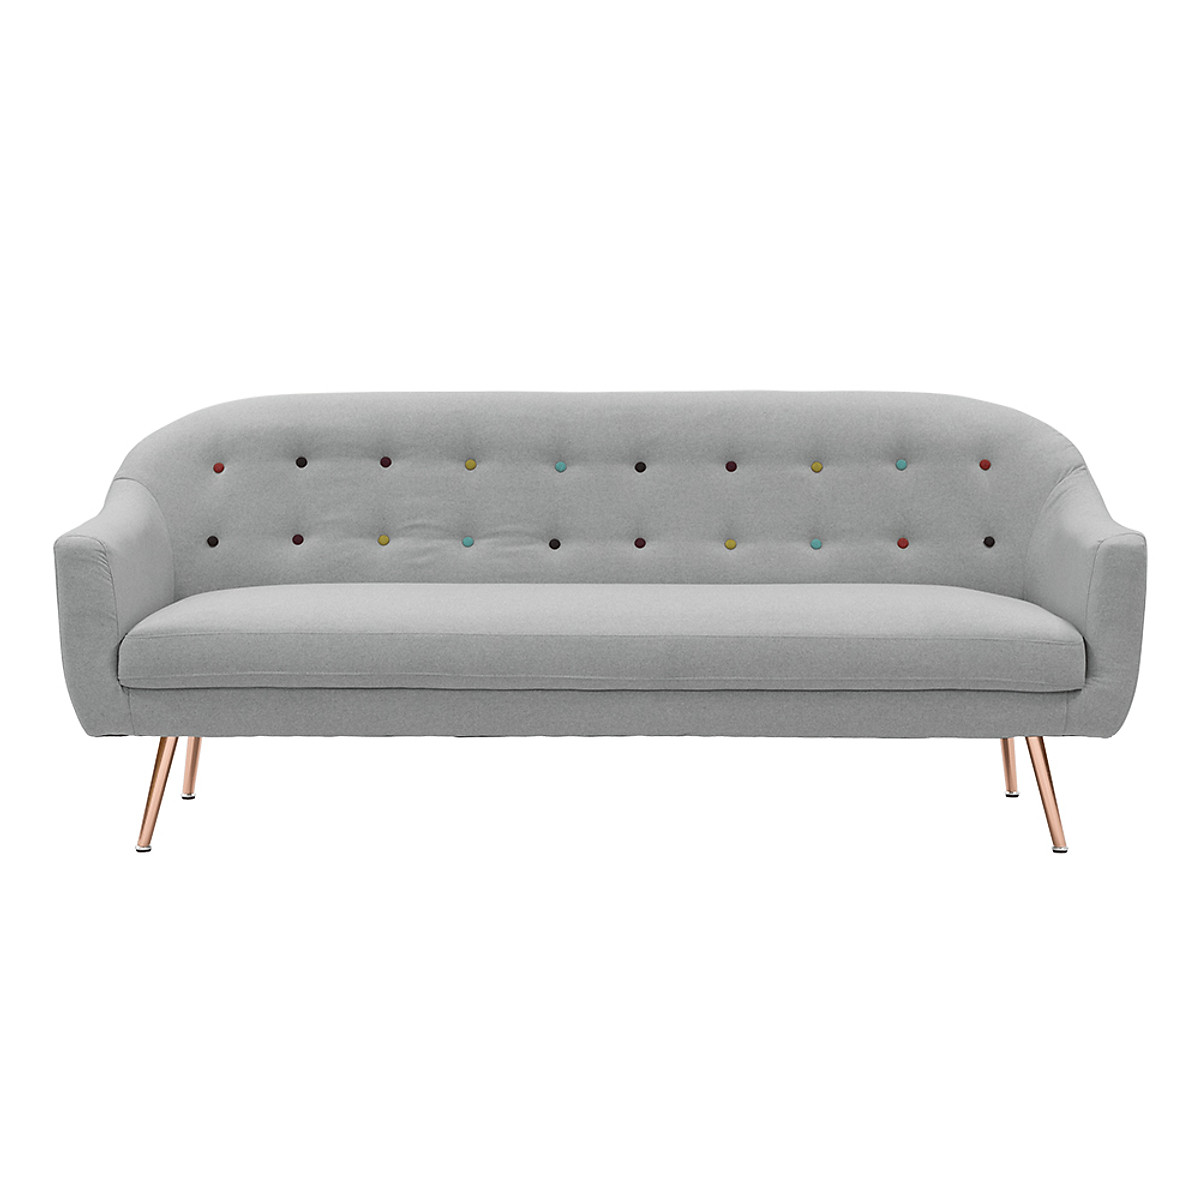 Sofa băng Arden - 1m6